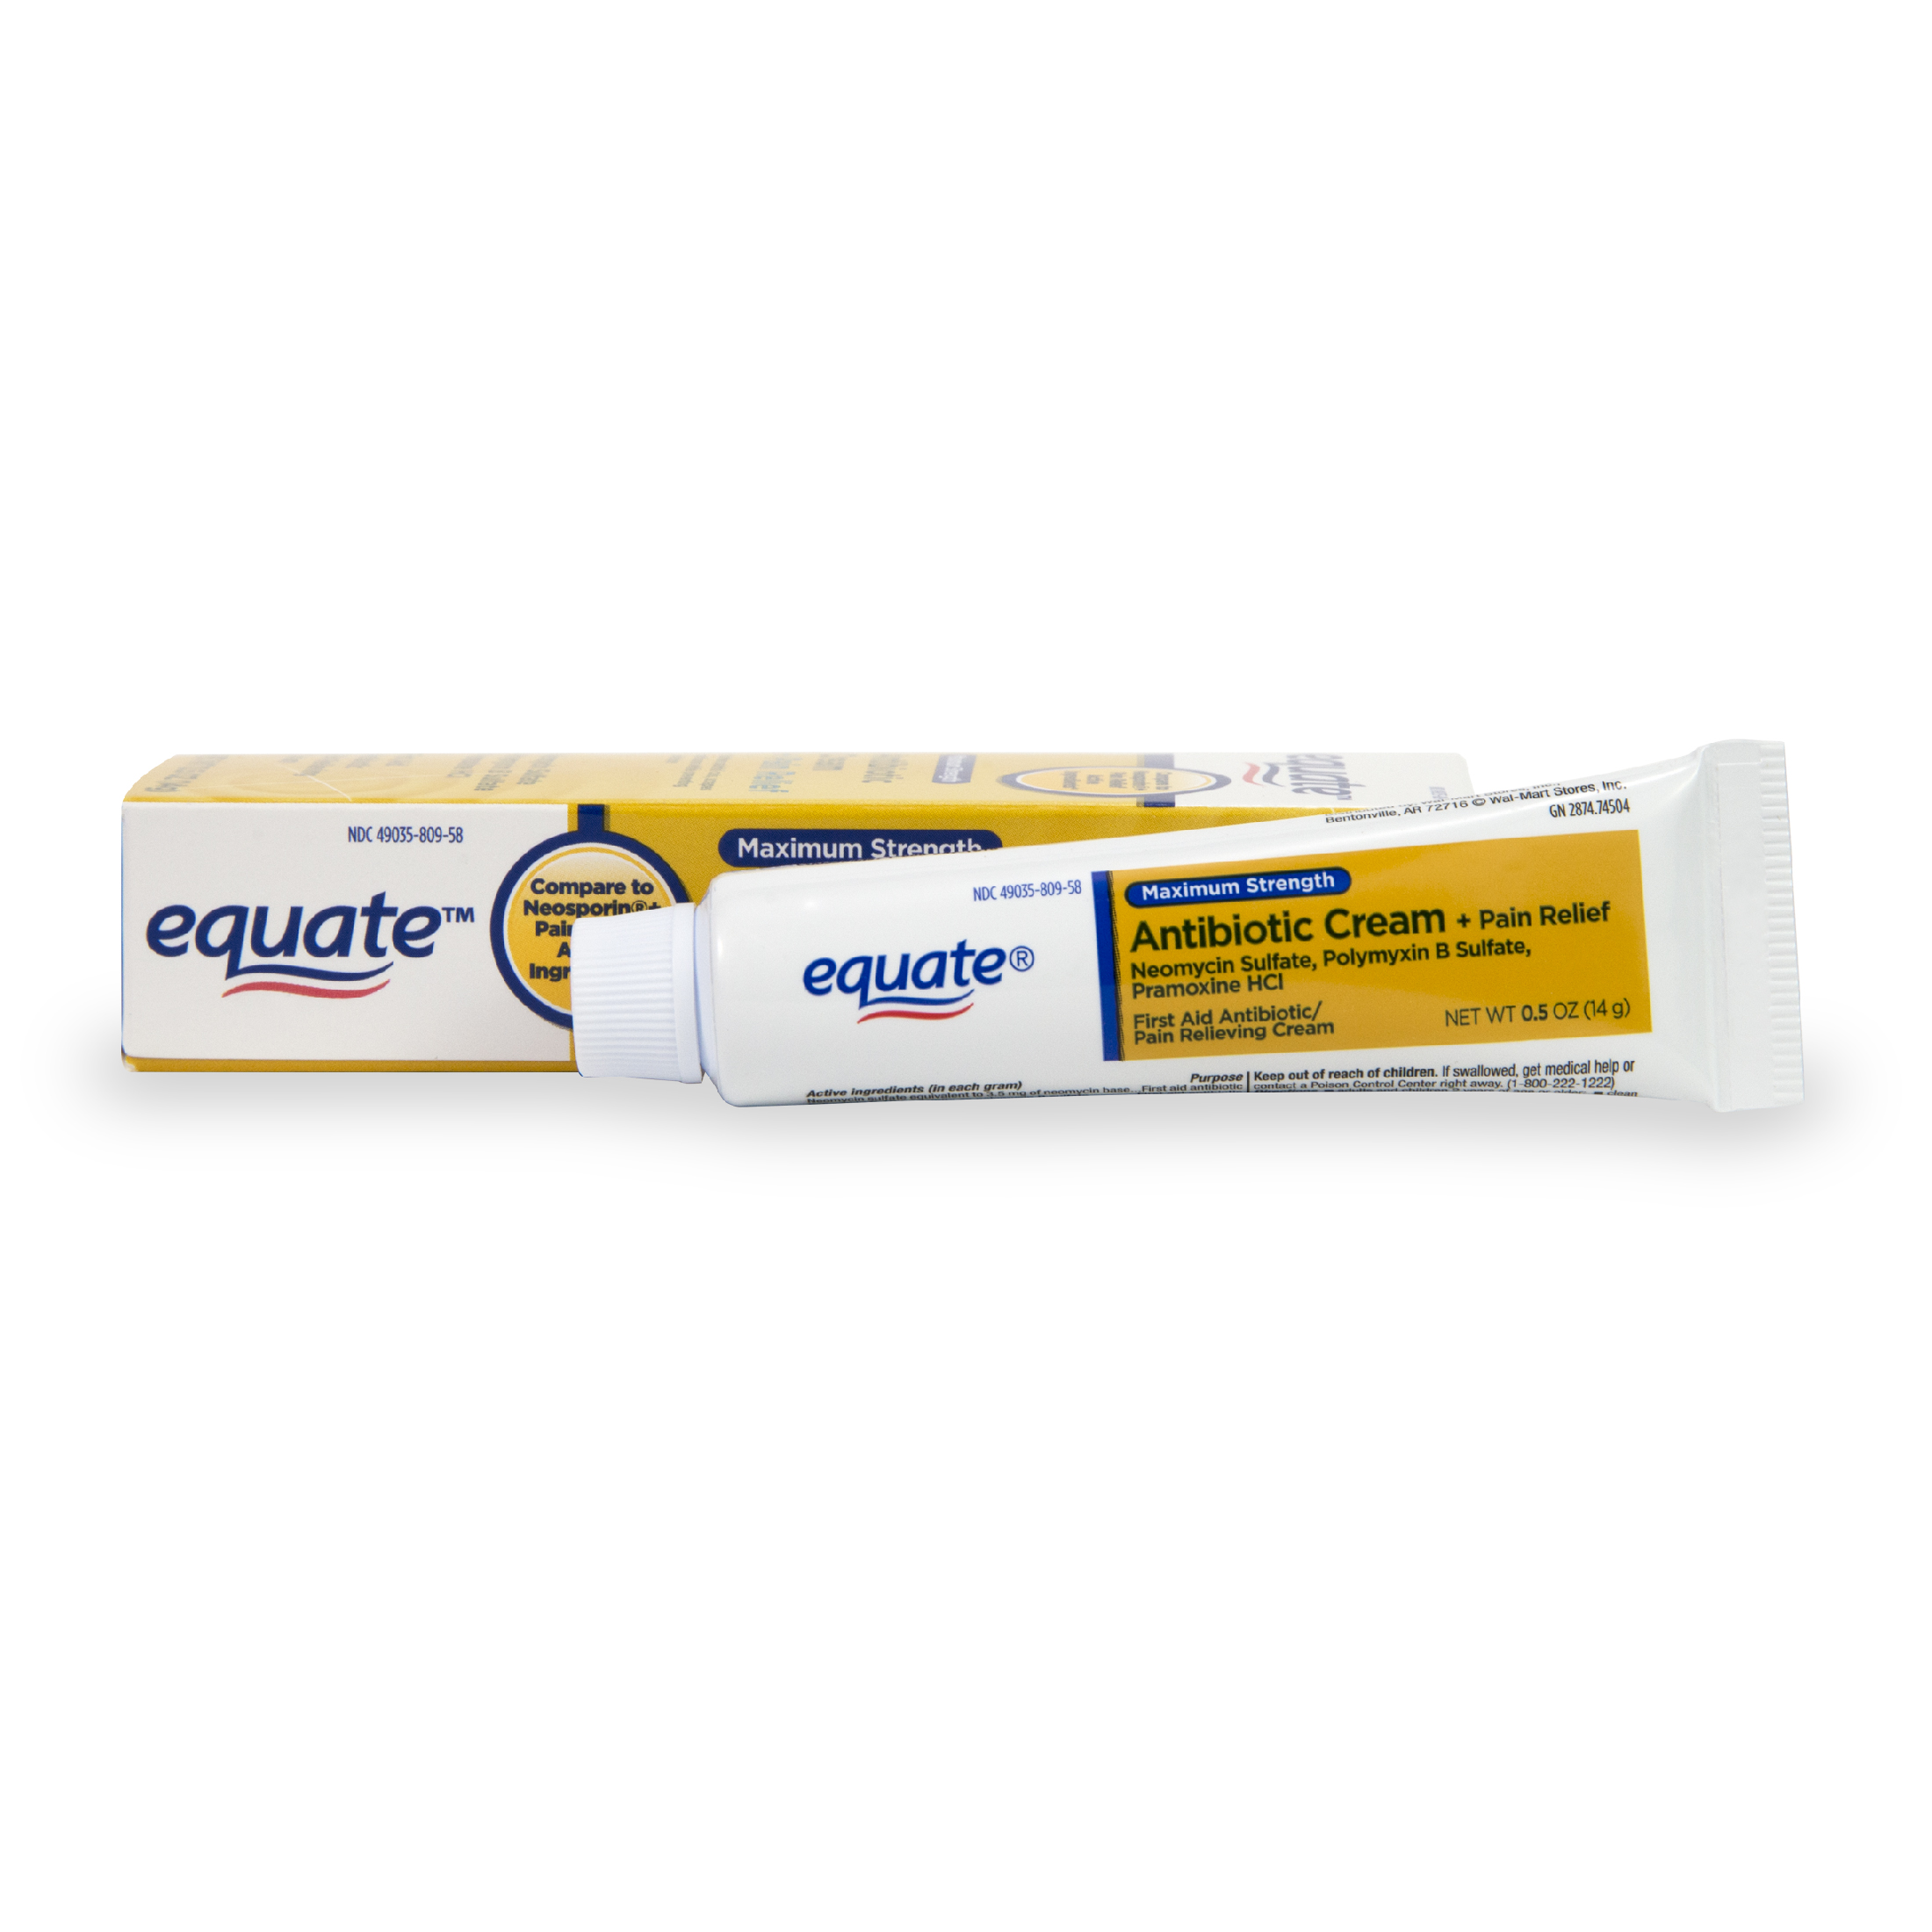 Equate Maximum Strength First Aid Antibiotic Cream + Pain Relief, temporarily relieves pain, 0.5 Oz - image 5 of 7